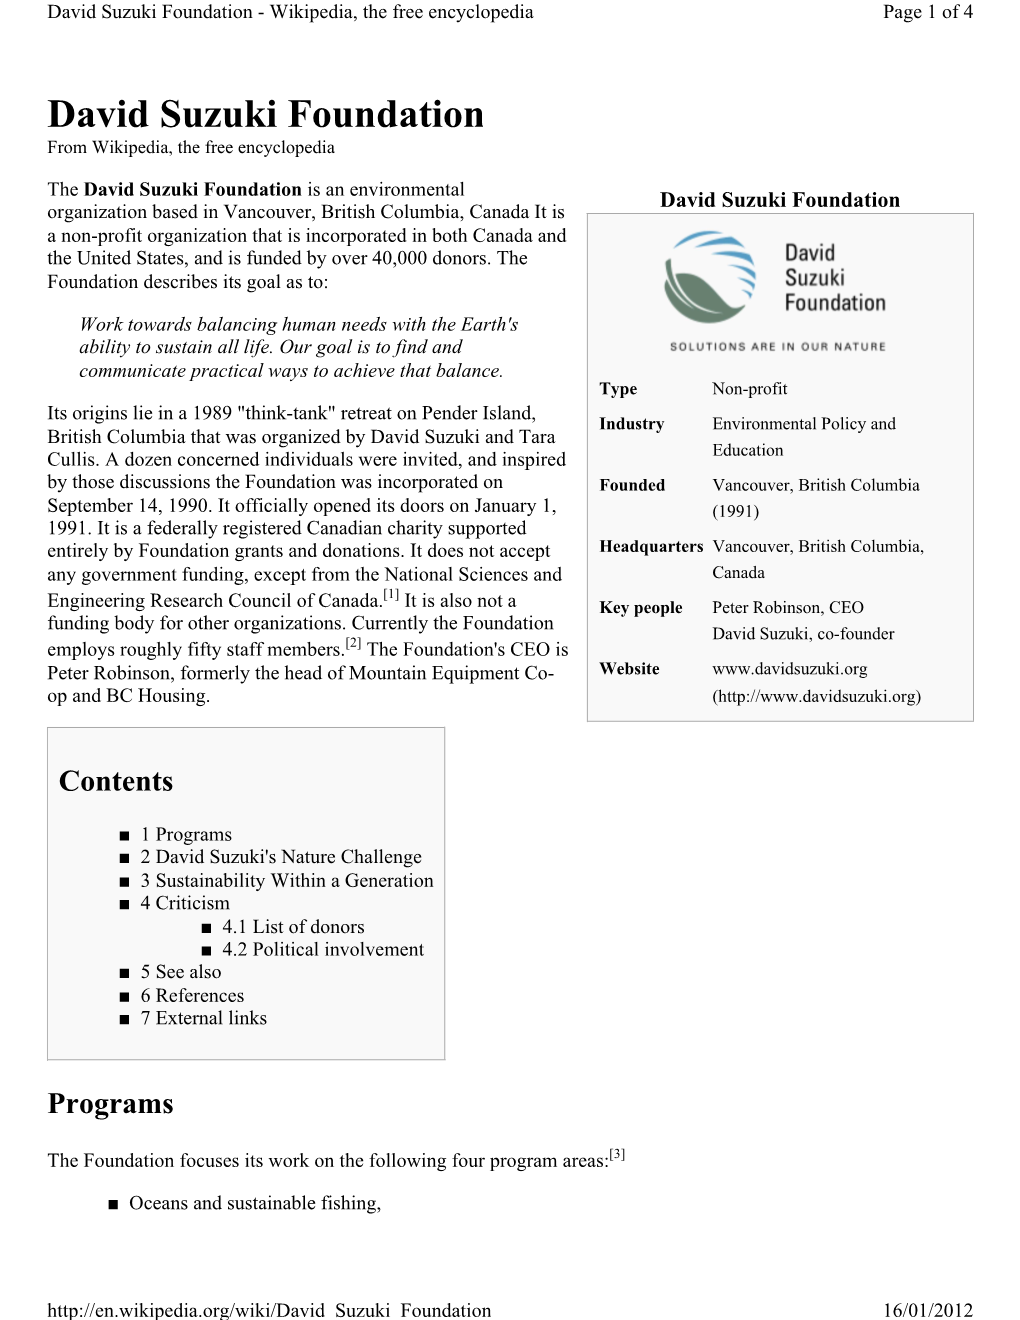 David Suzuki Foundation - Wikipedia, the Free Encyclopedia Page 1 of 4